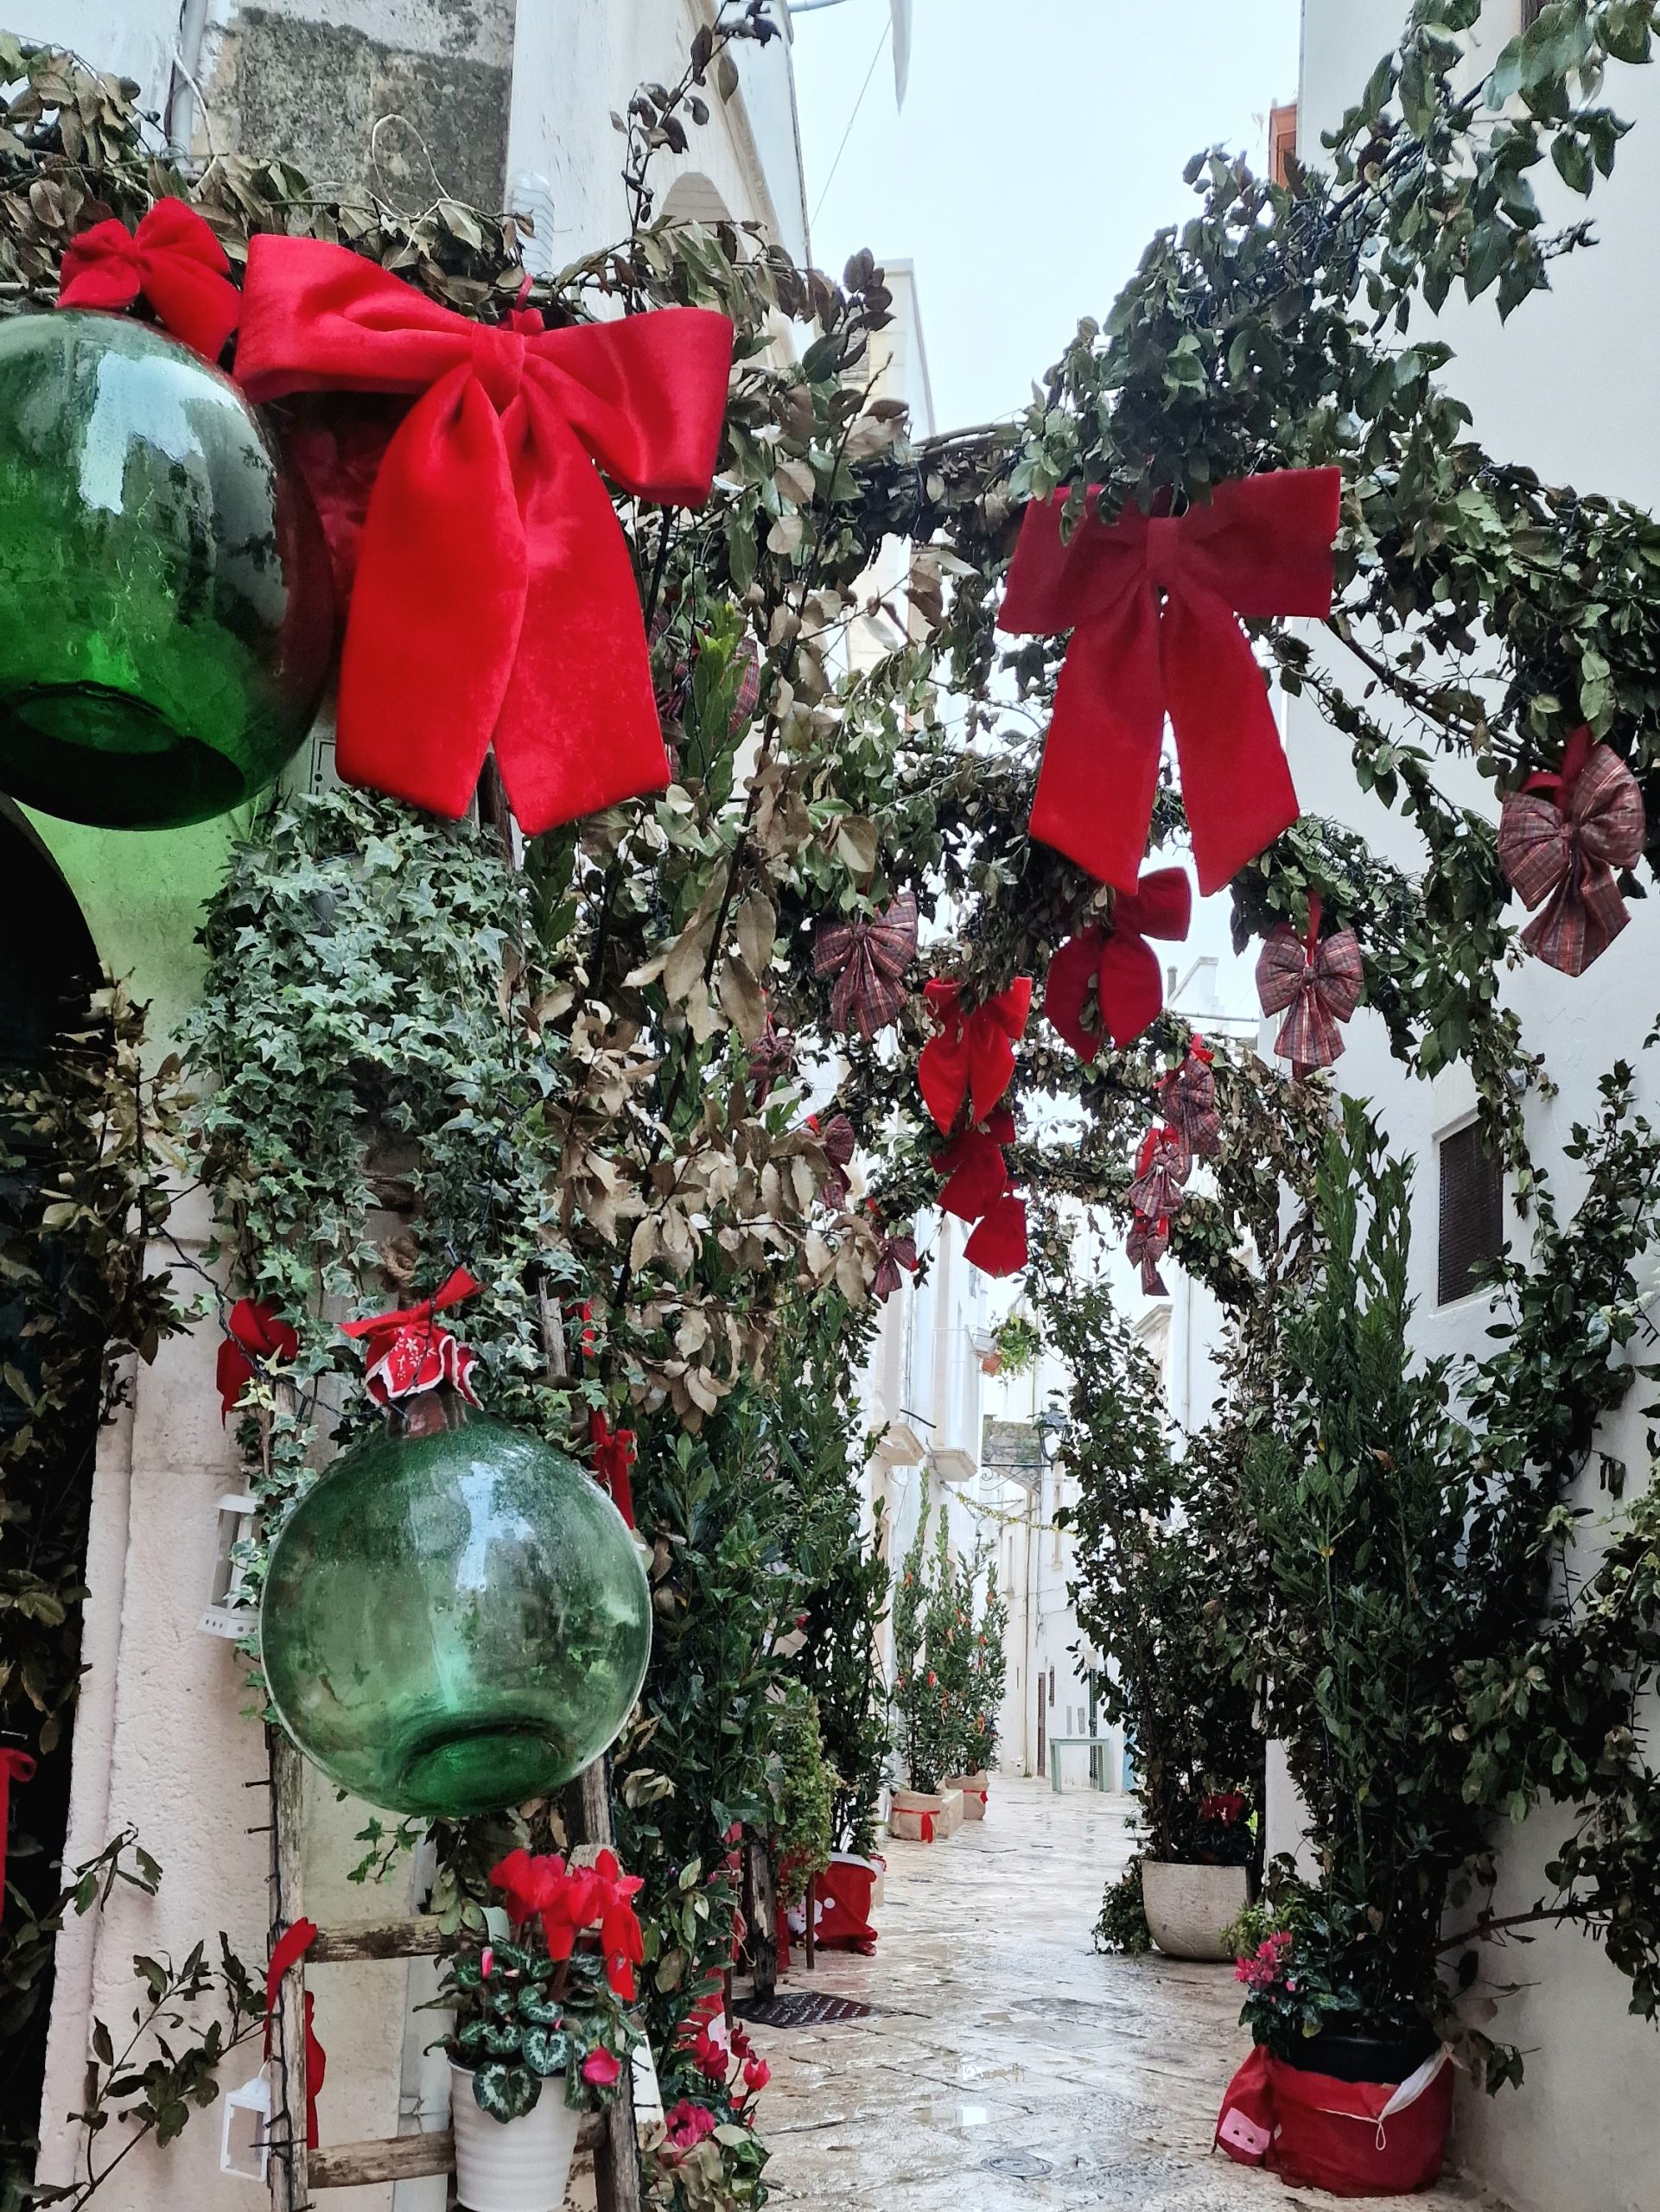 Christmas decorations in Locotorondo